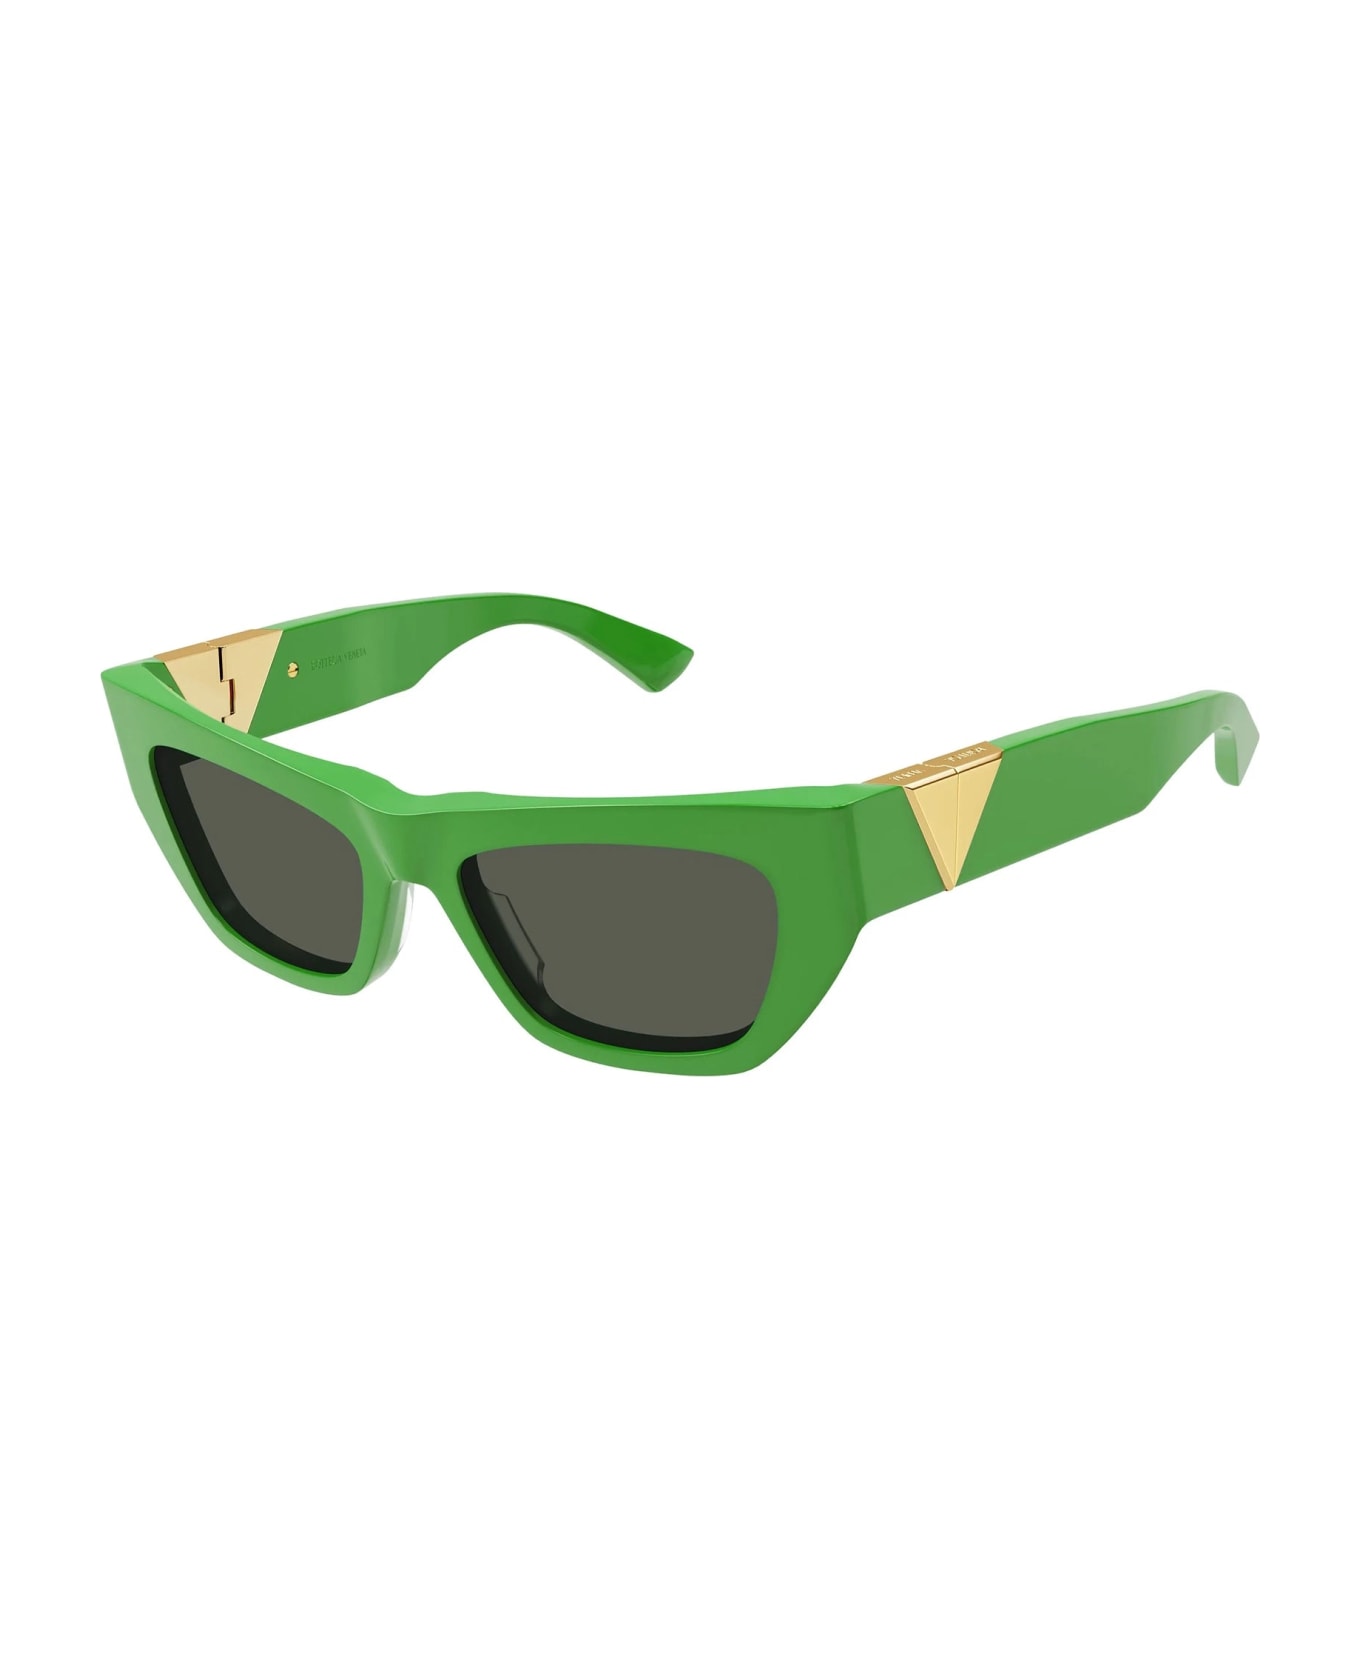 Bottega Veneta Eyewear Bv1177s-003 - Green Sunglasses - green